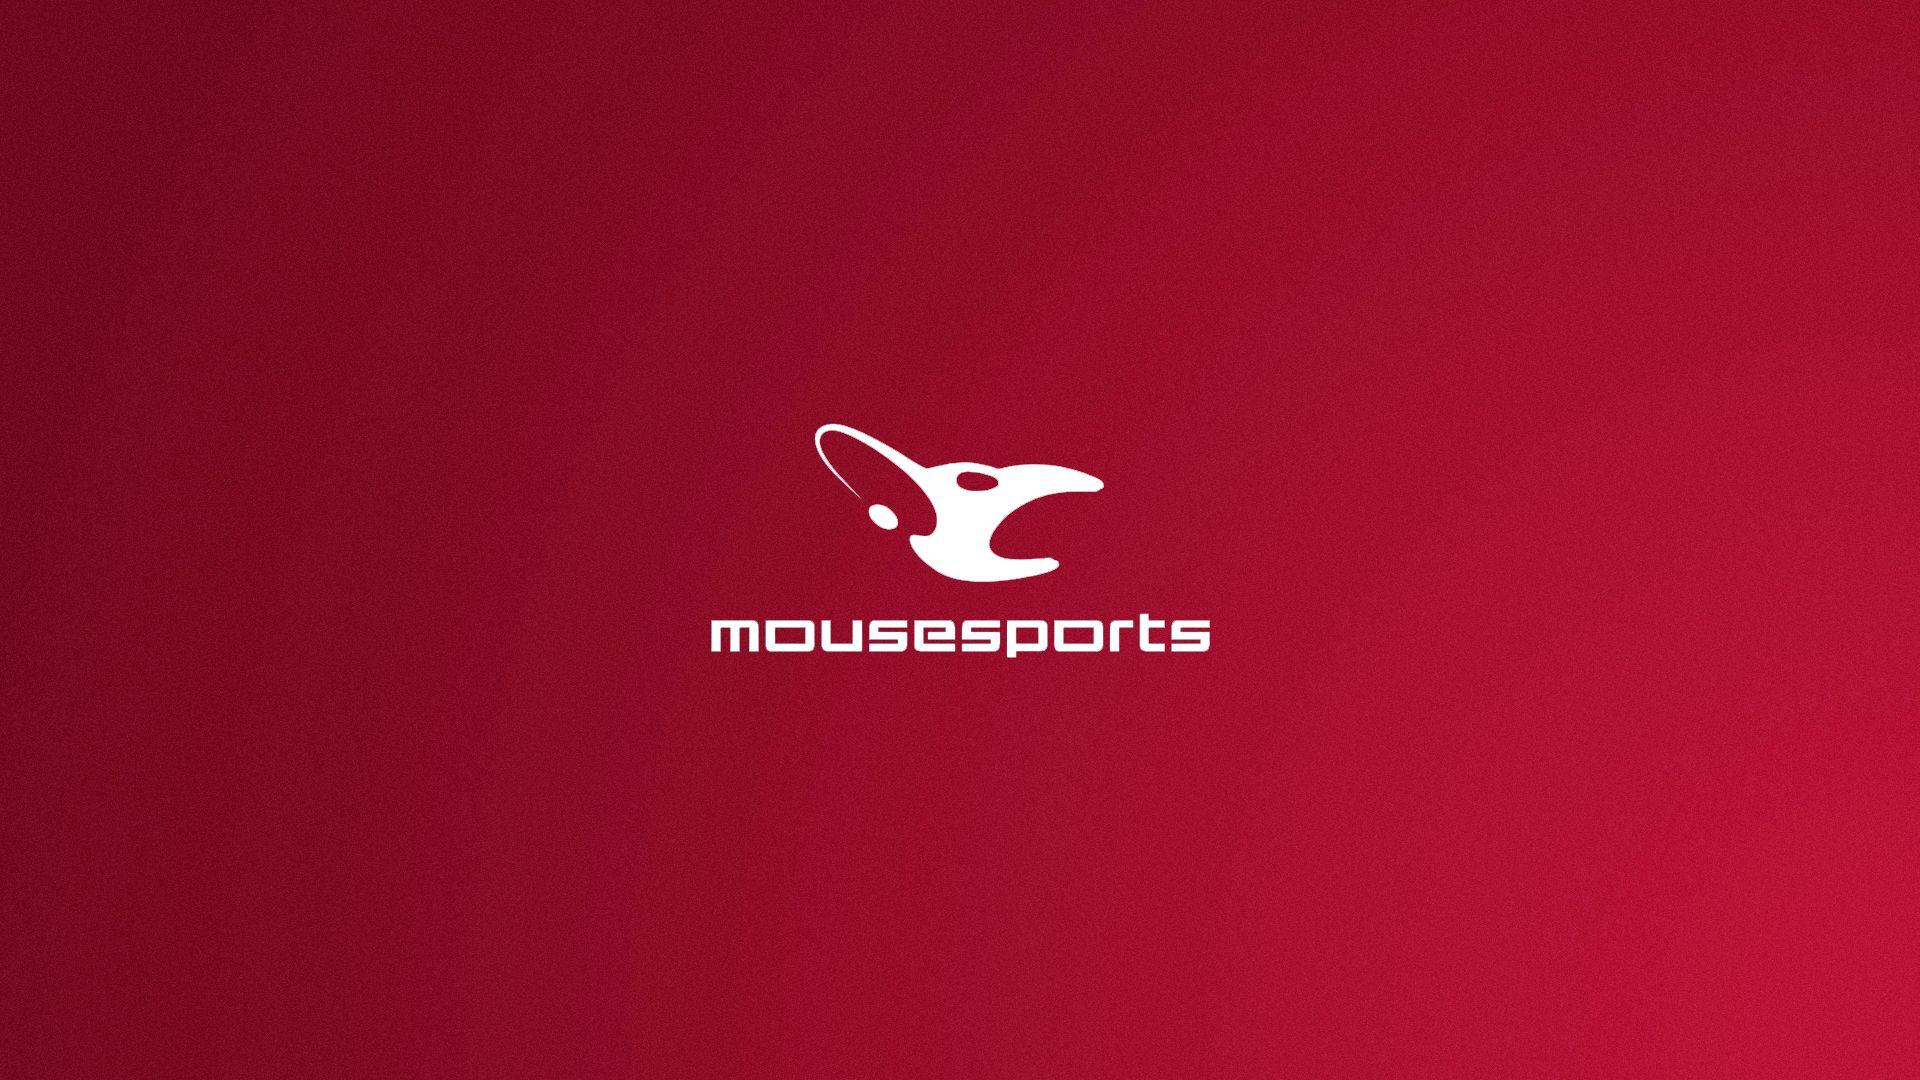 Mousesports Logo - Rocketeers